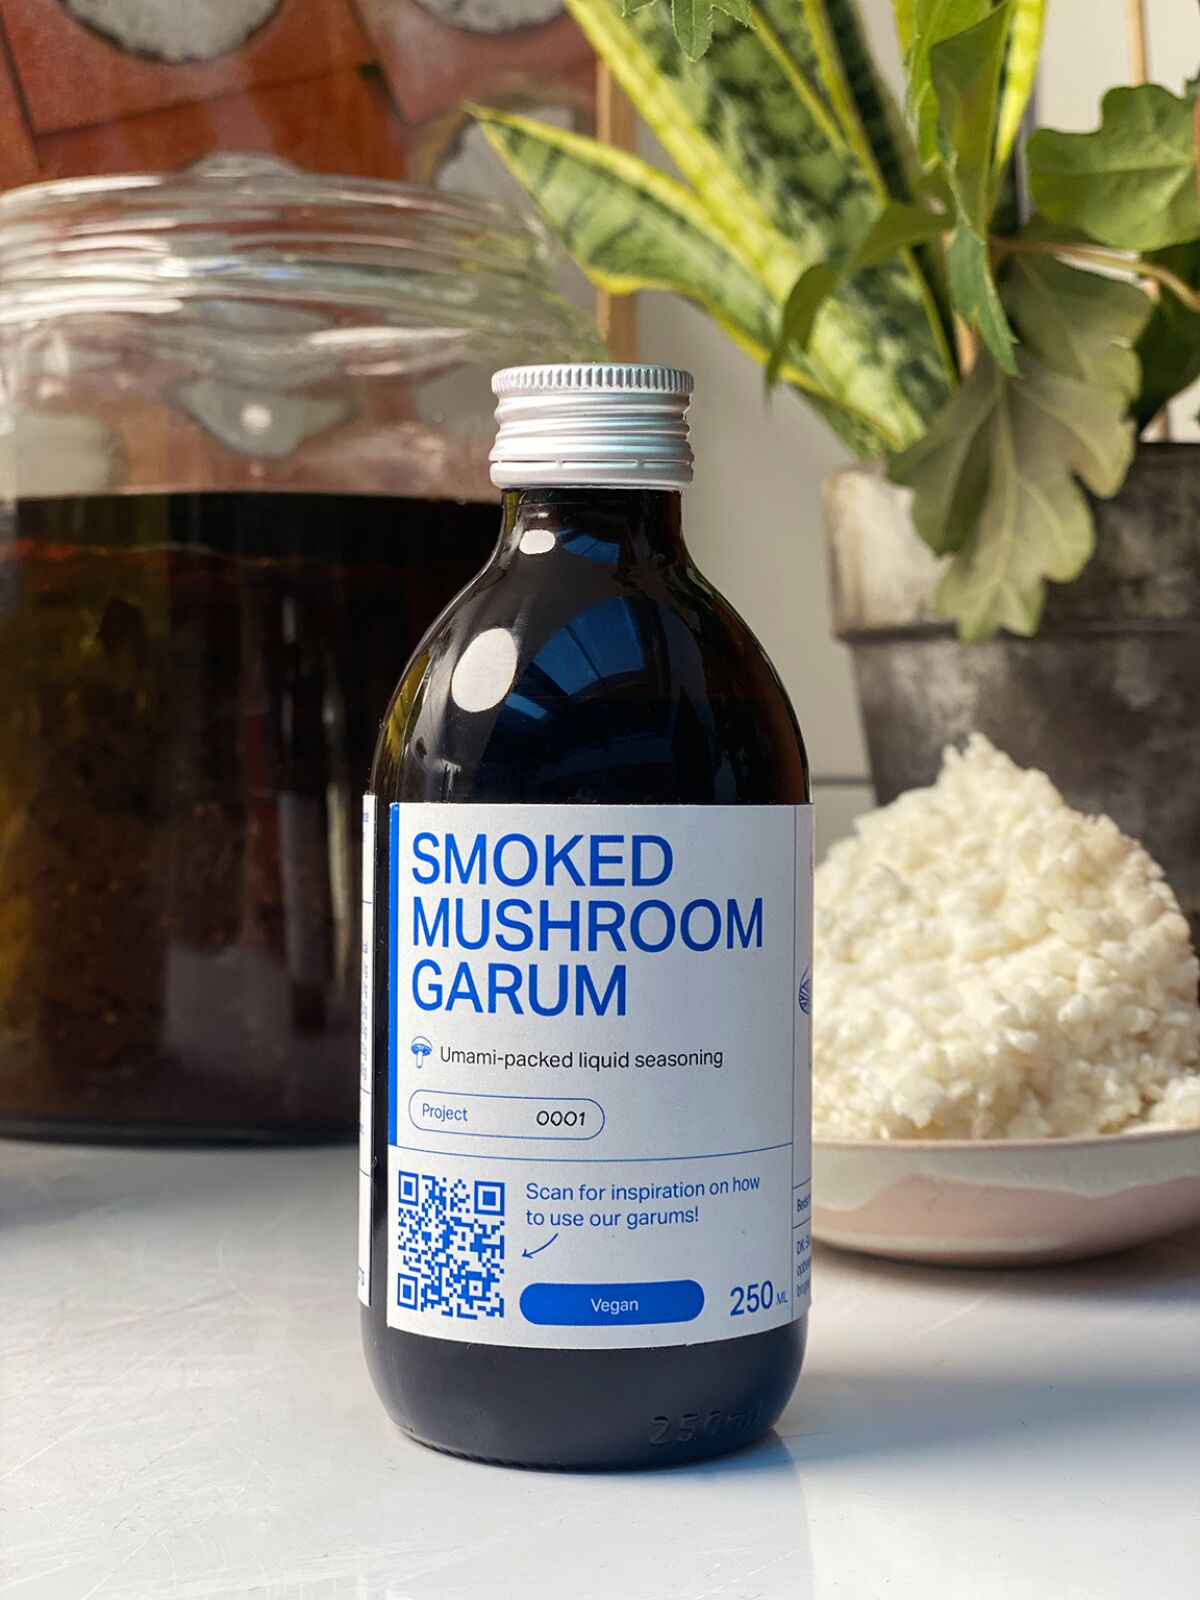 A bottle of the Noma smoked mushroom garum liquid seasoning.